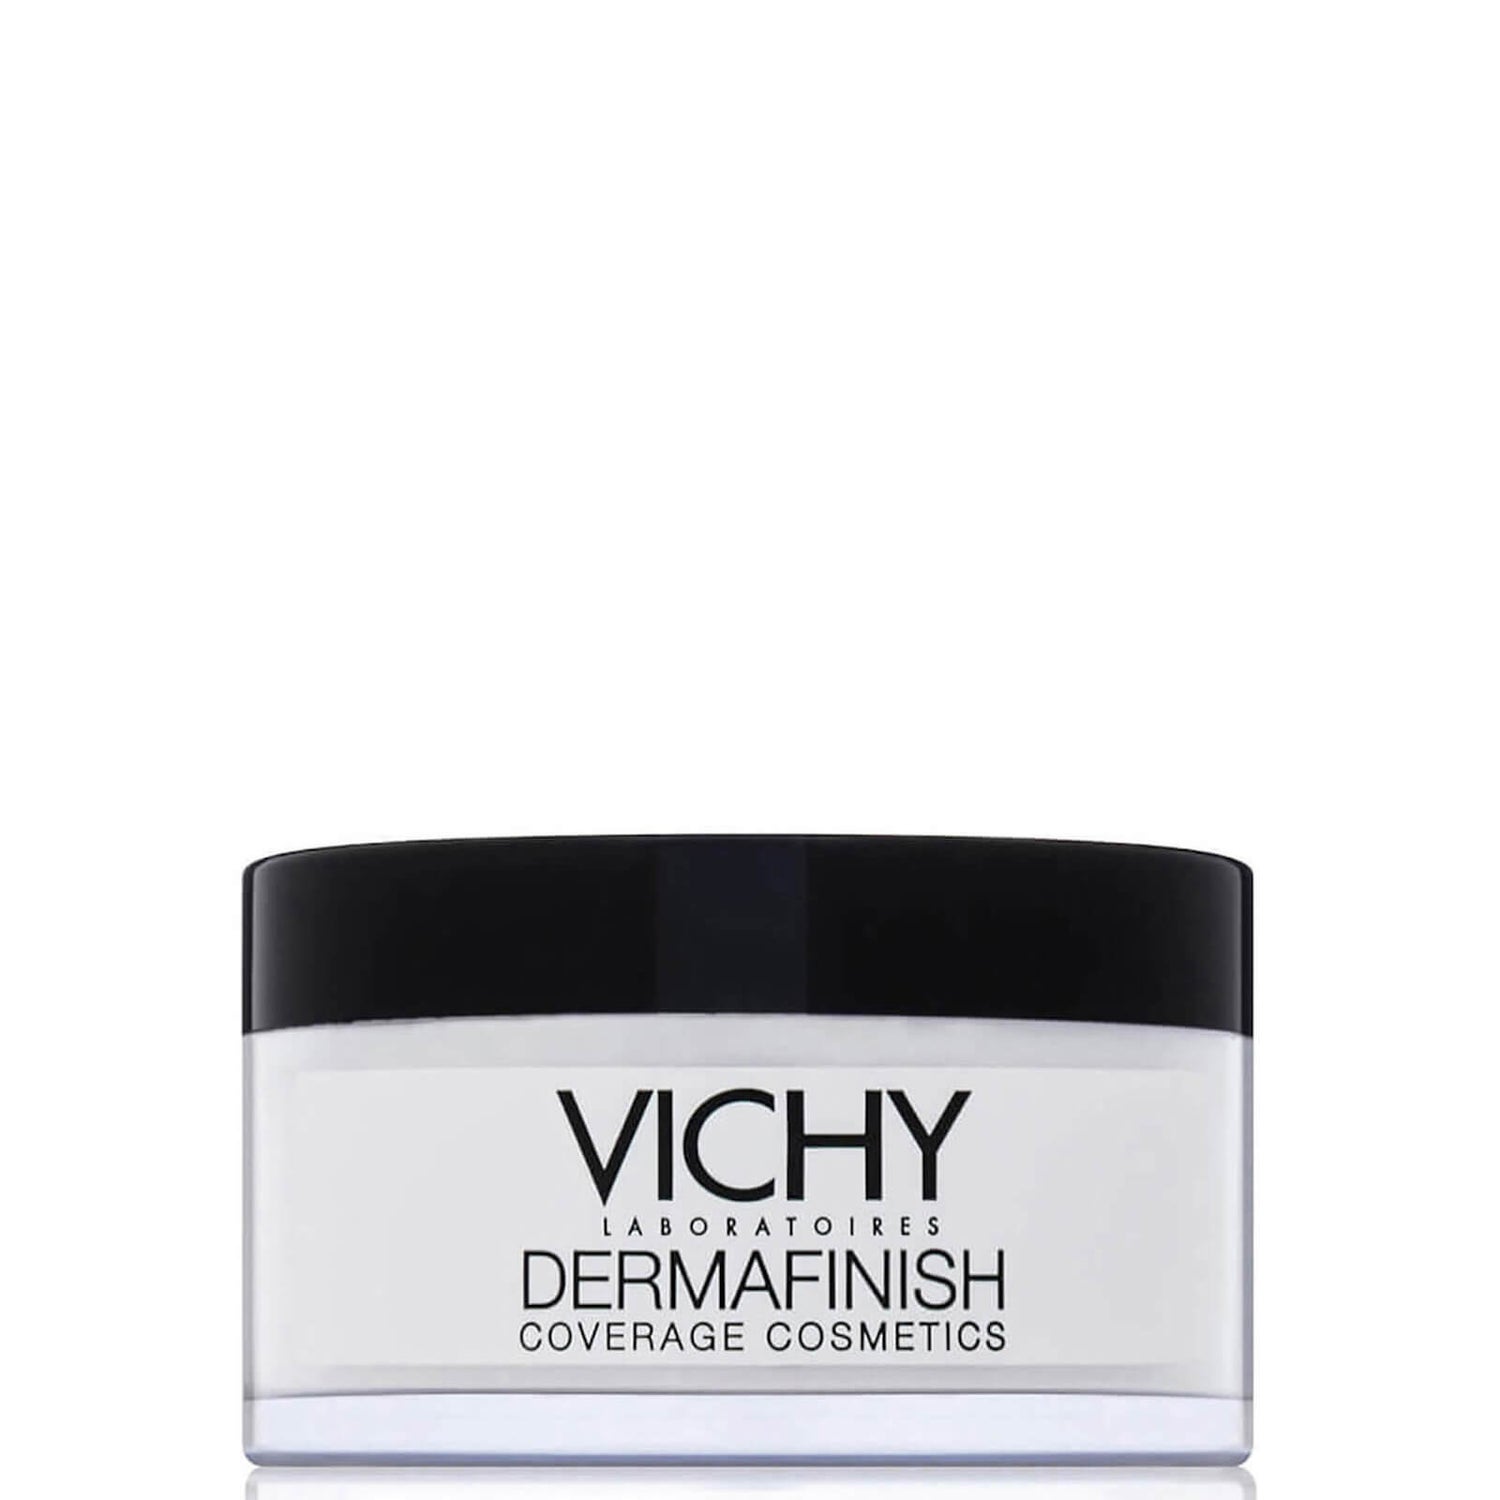 Vichy Dermafinish Setting Powder (0.99 oz.)